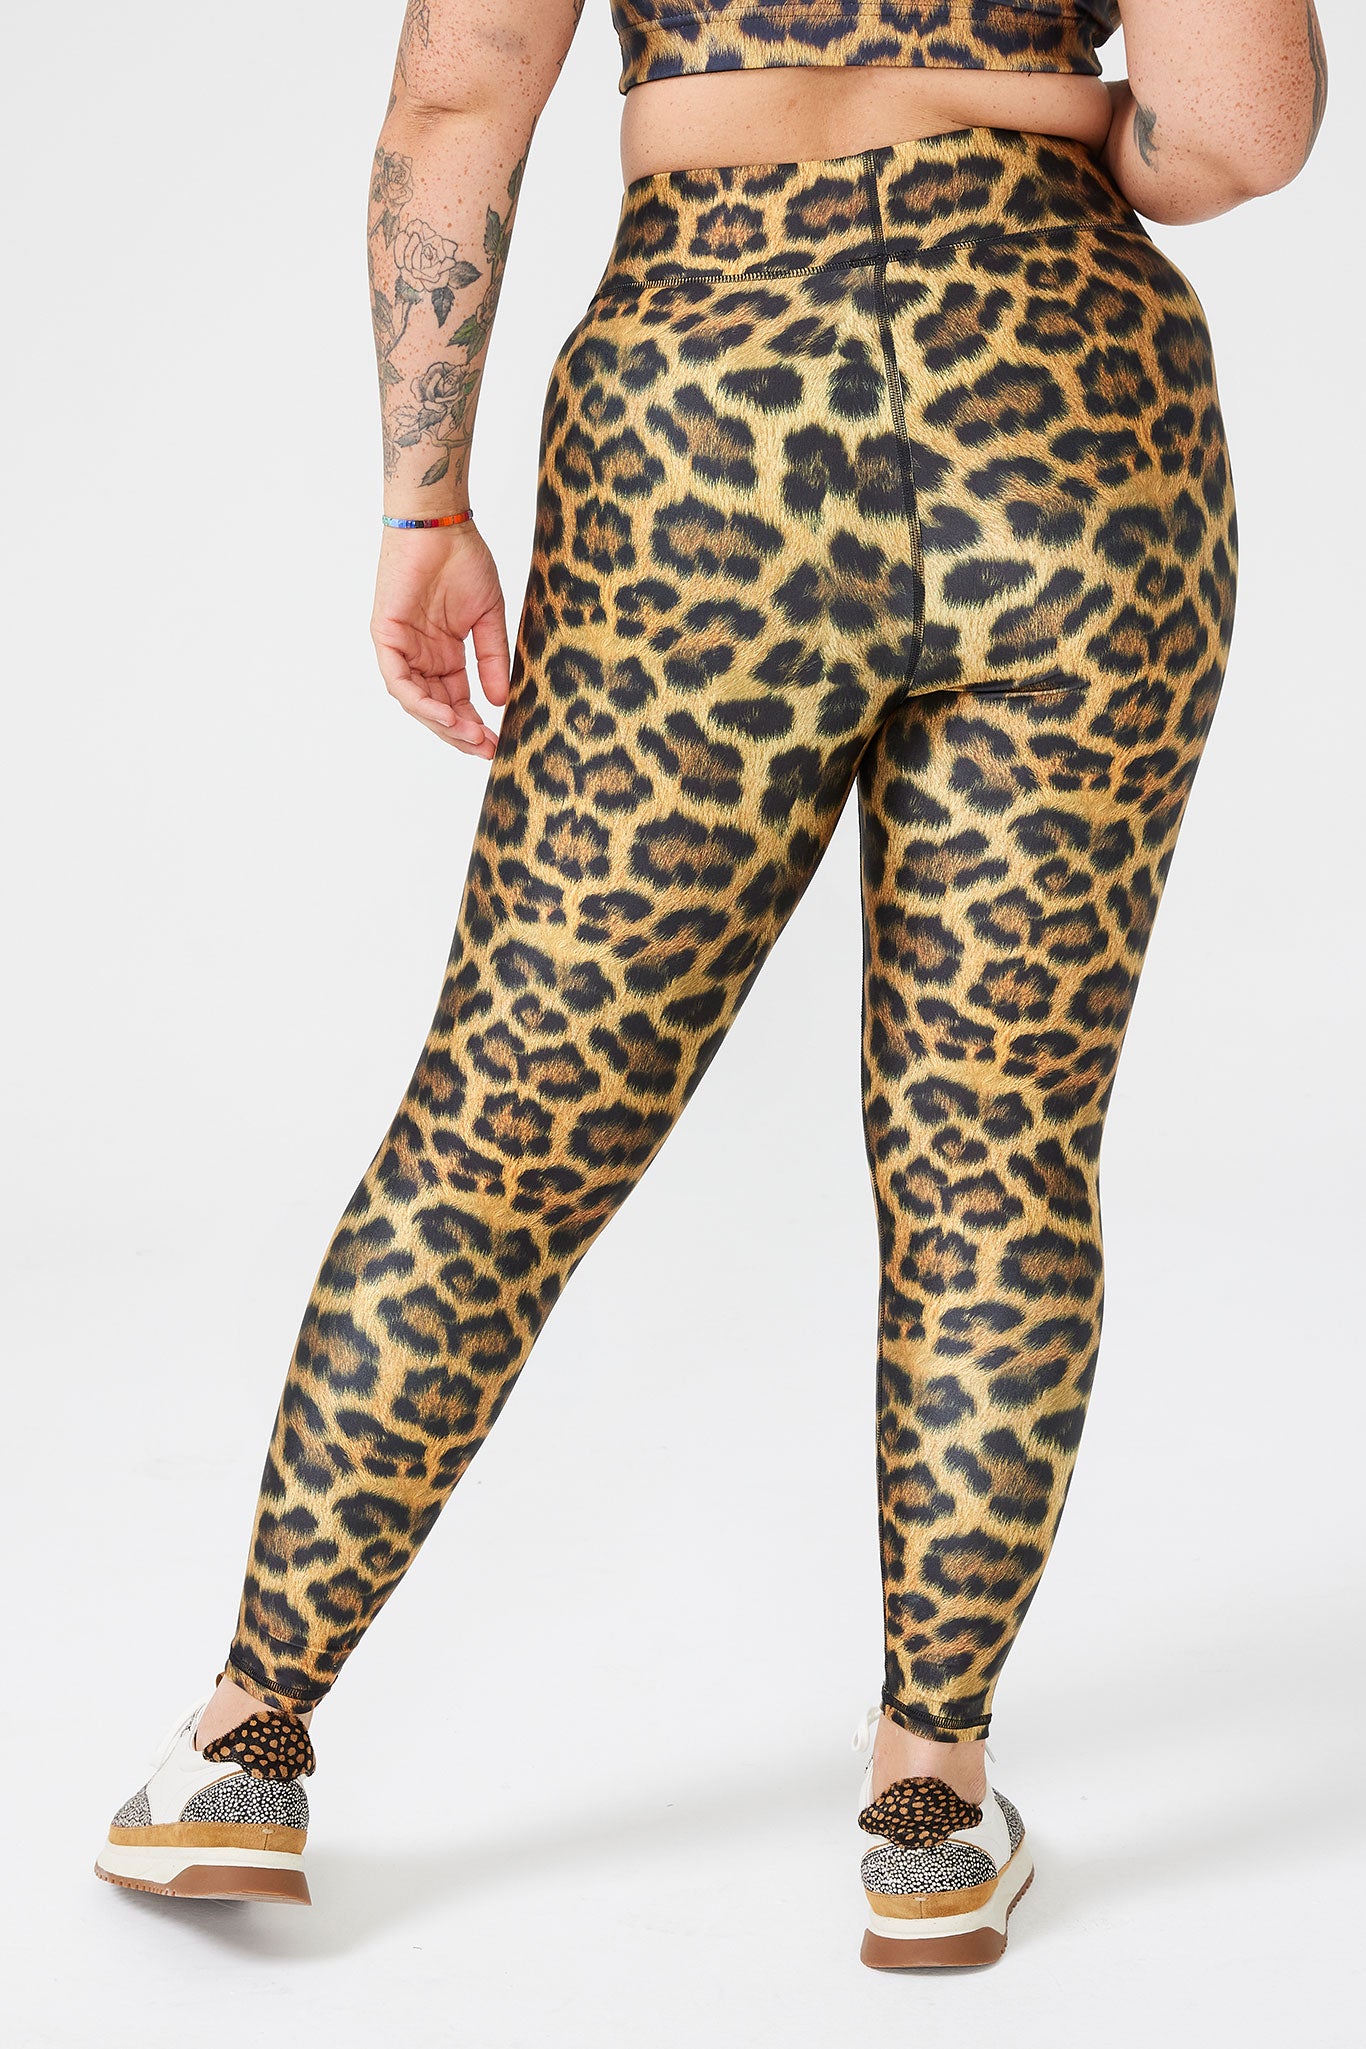 Generic Yrrety Leopard Print Women Leggings High Waist Fitness